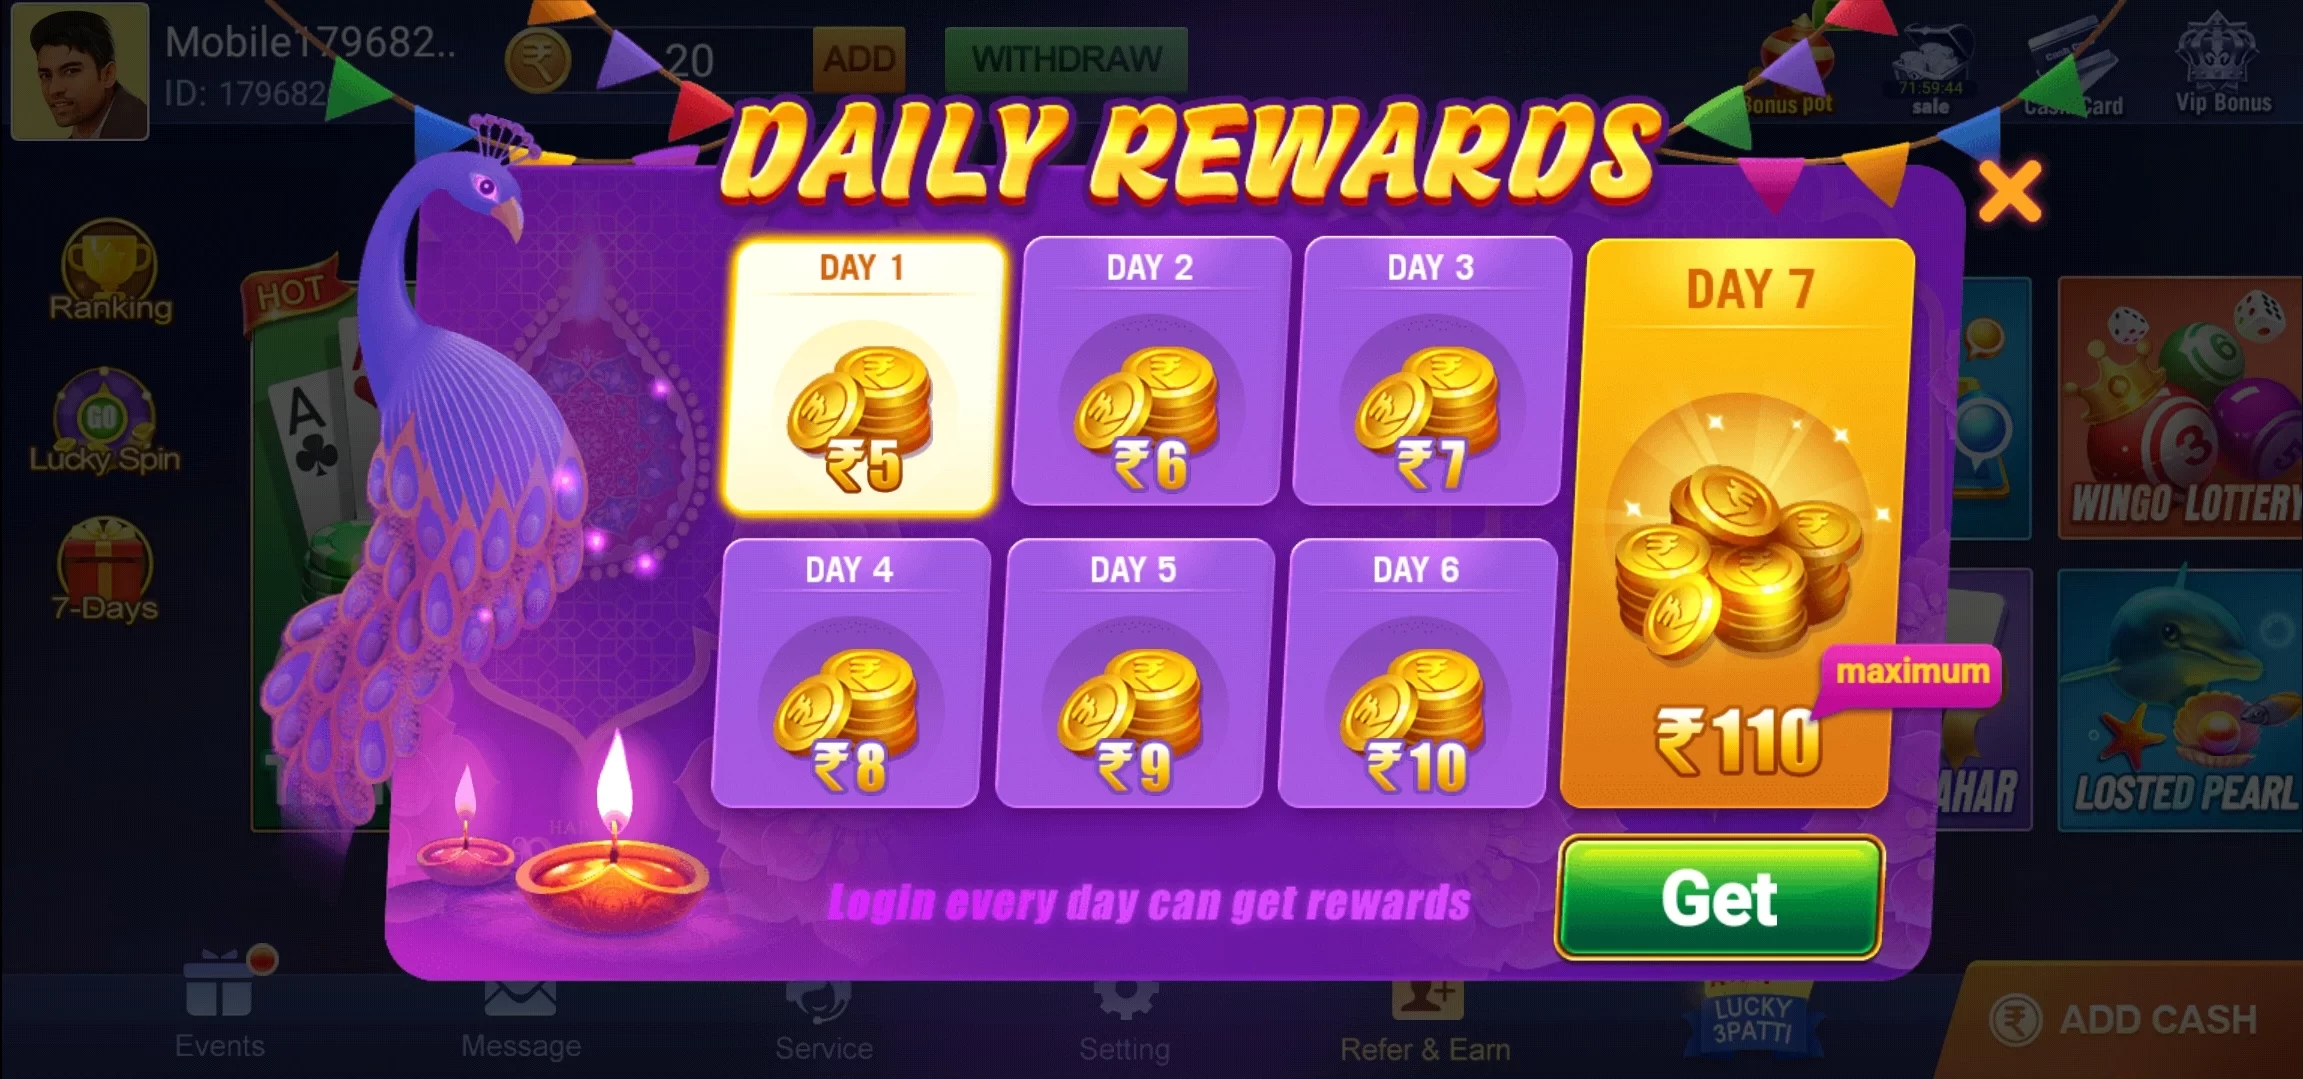 claim the daily rewards